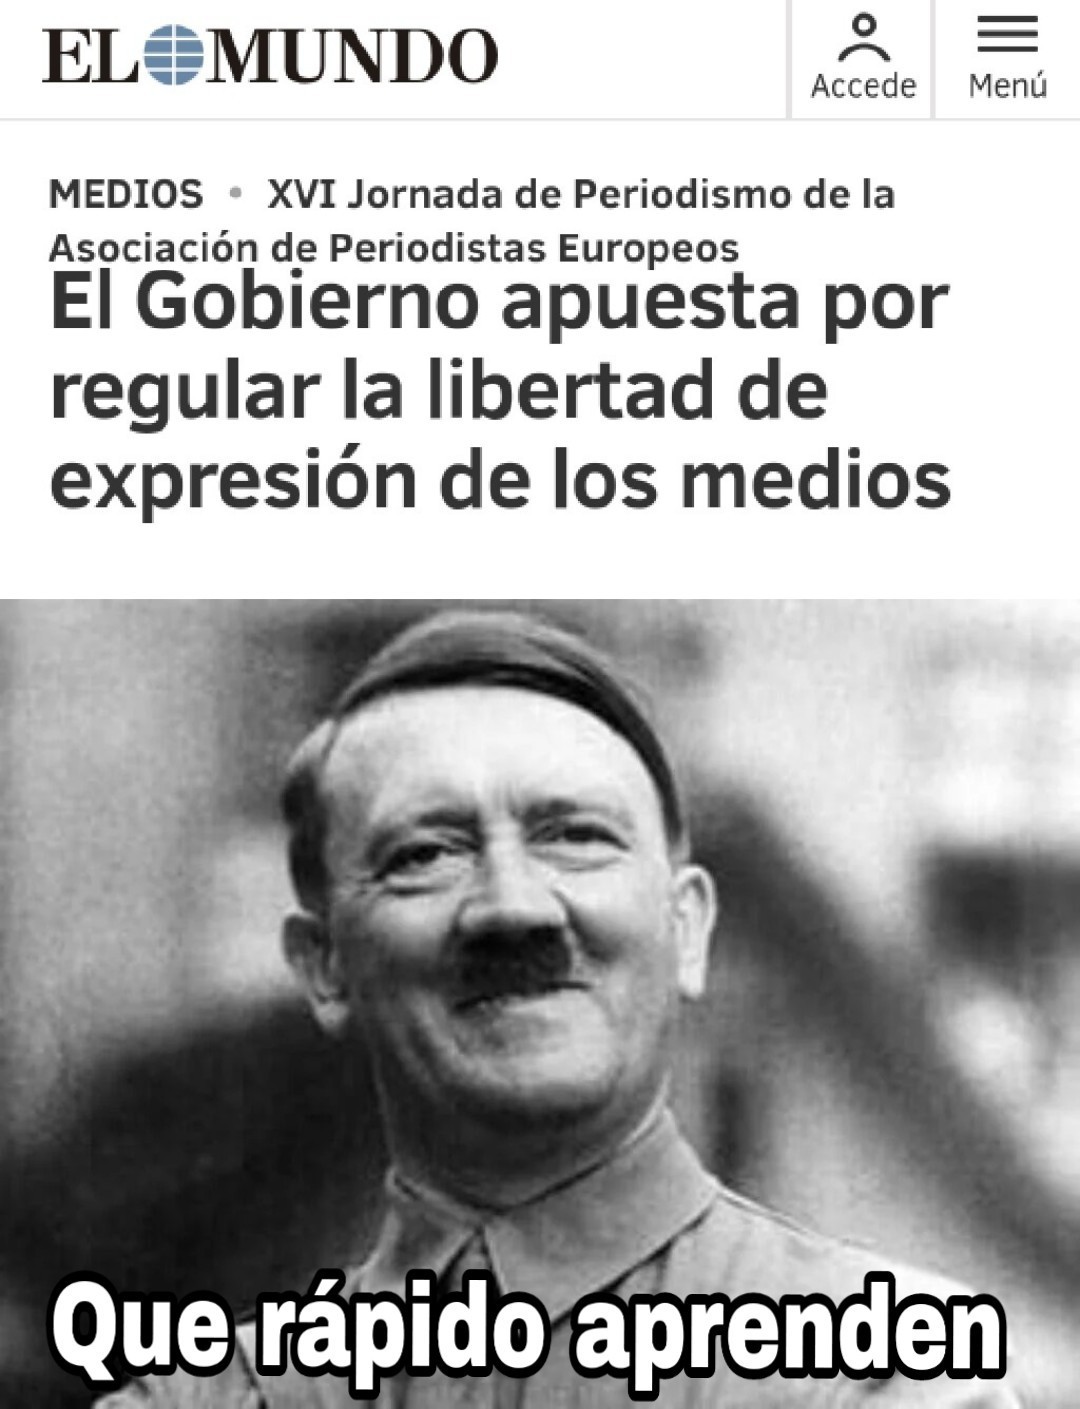 Viva España joder - meme